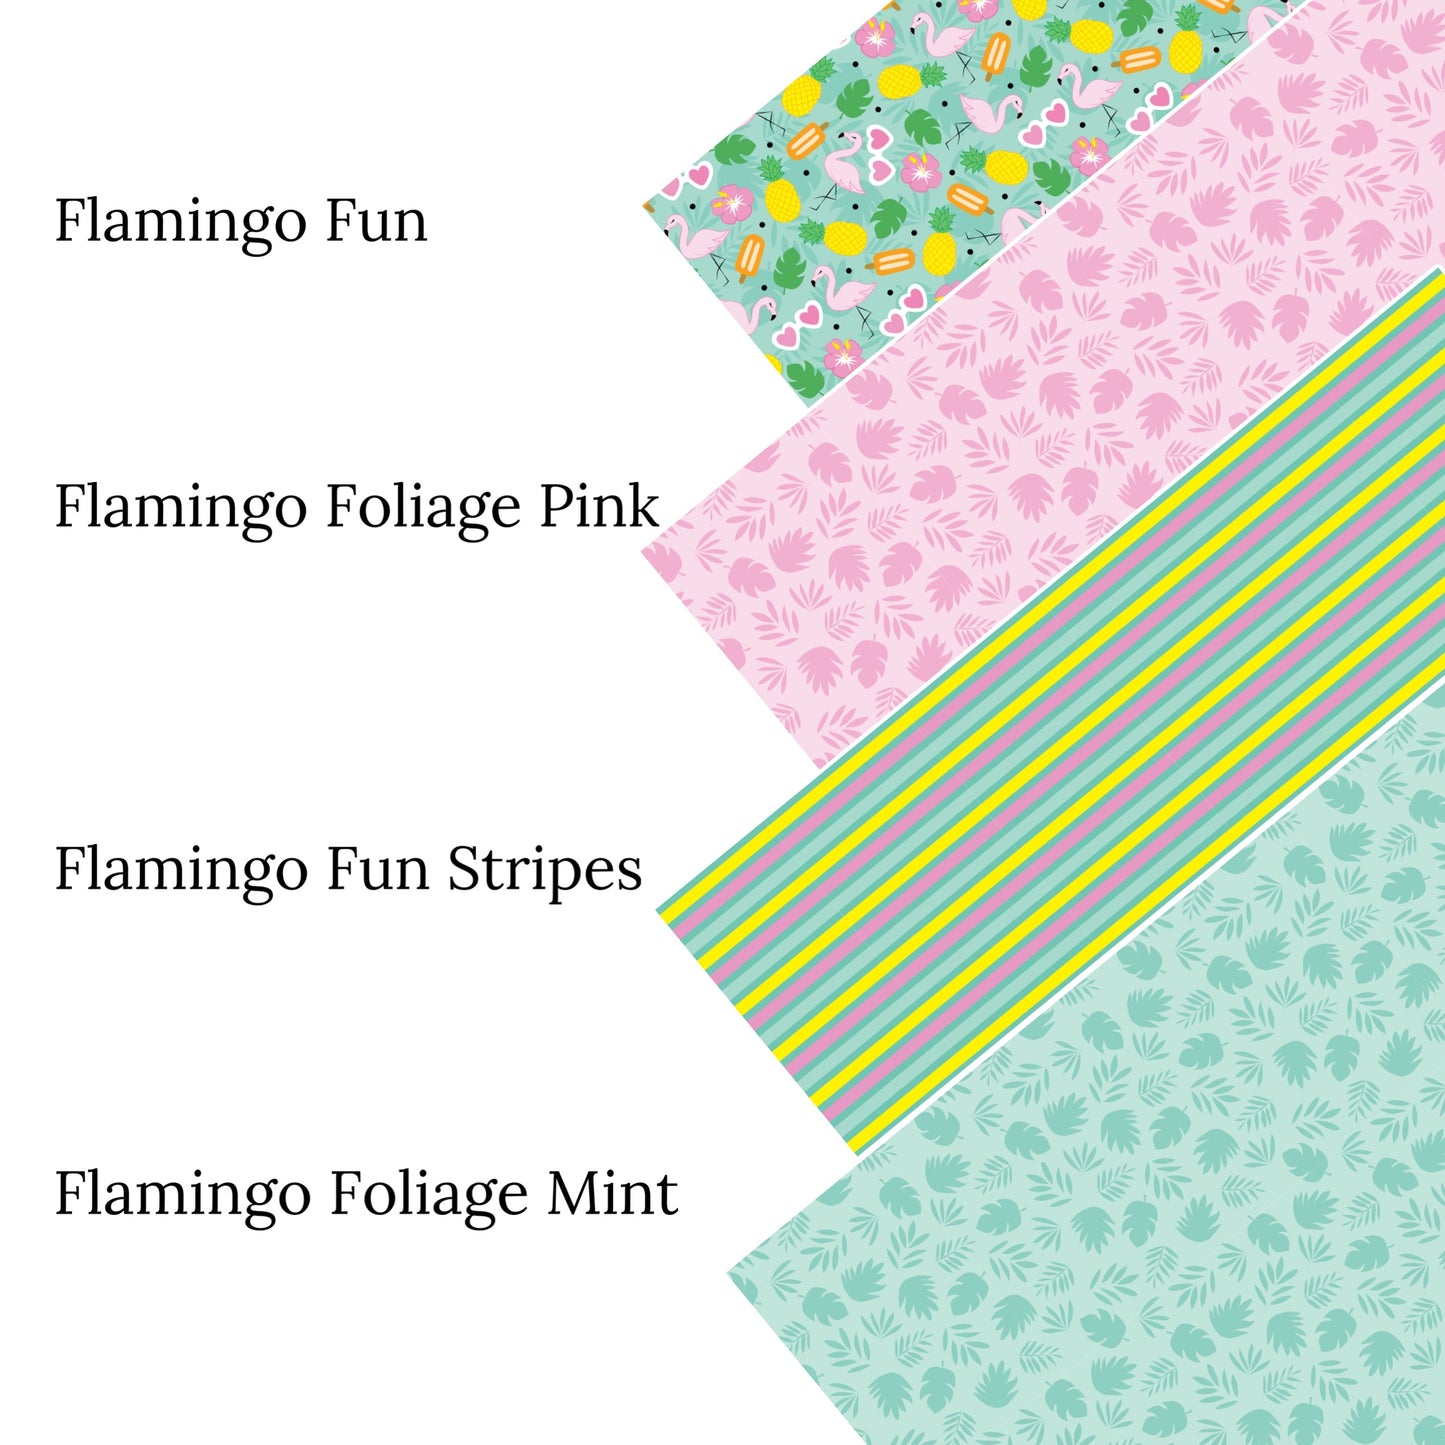 Flamingo Foliage Pink Faux Leather Sheets